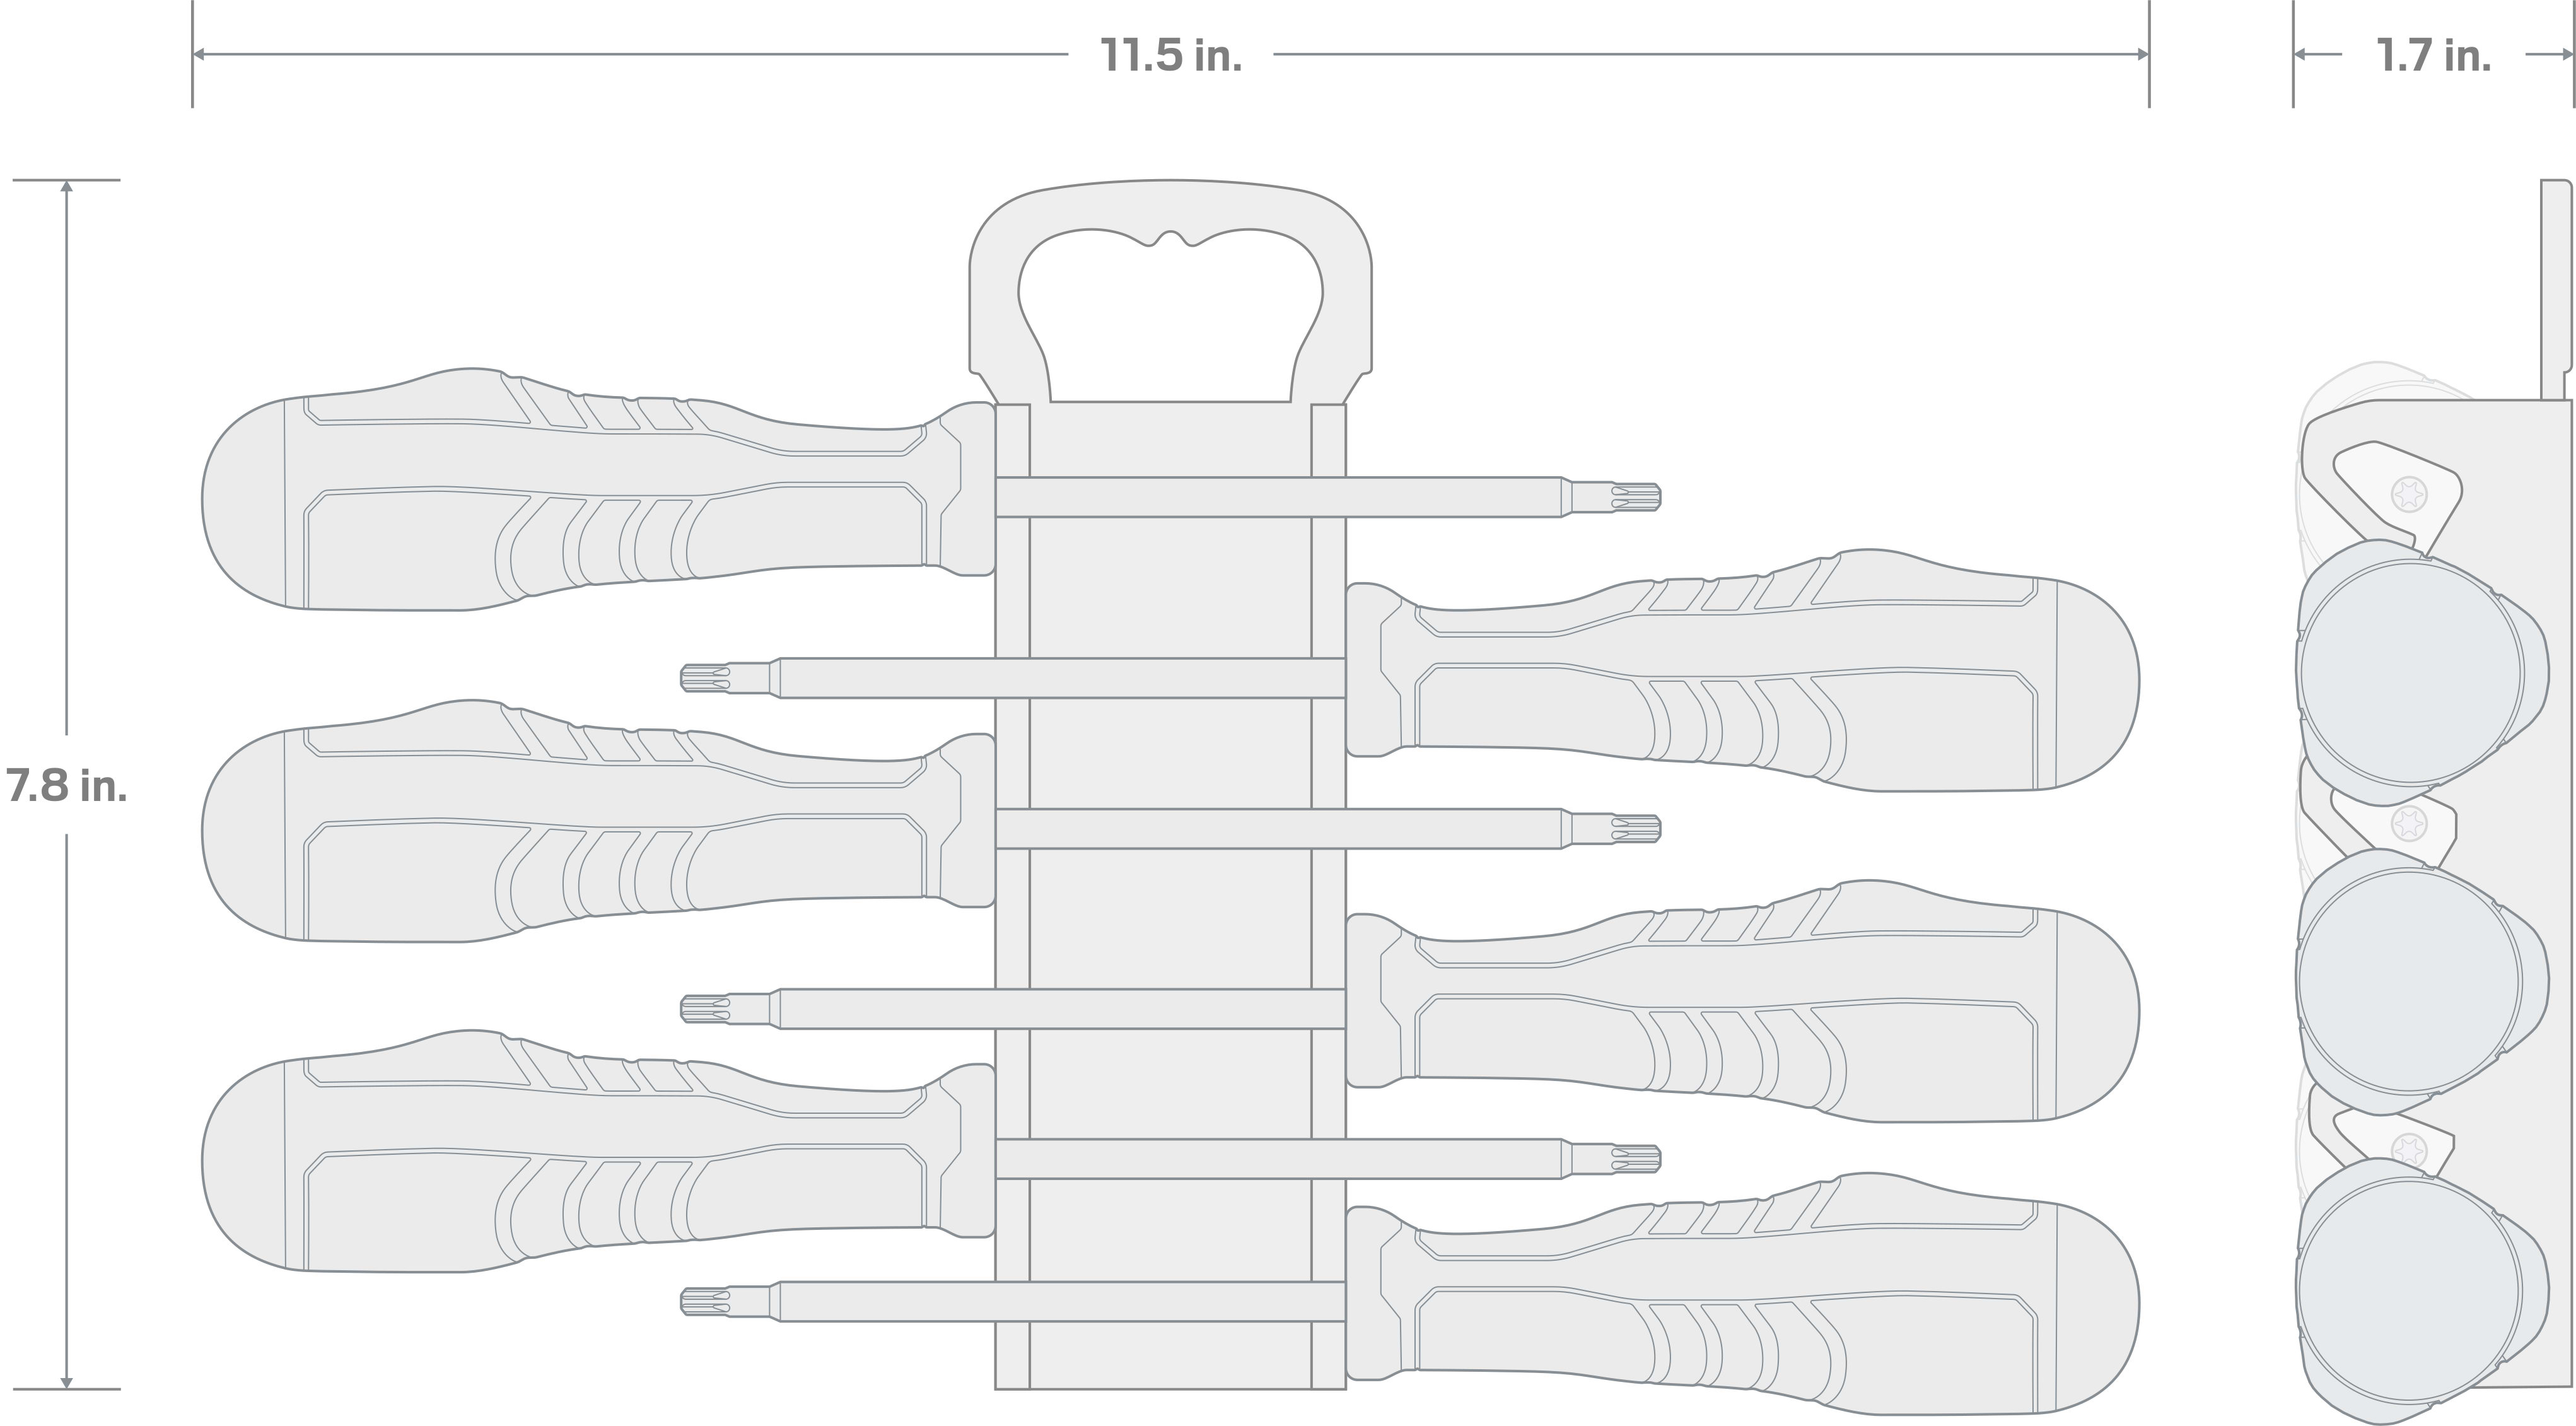 Specs for Torx High-Torque Black Oxide Blade Screwdriver Set, 6-Piece (T10-T30) with Holder